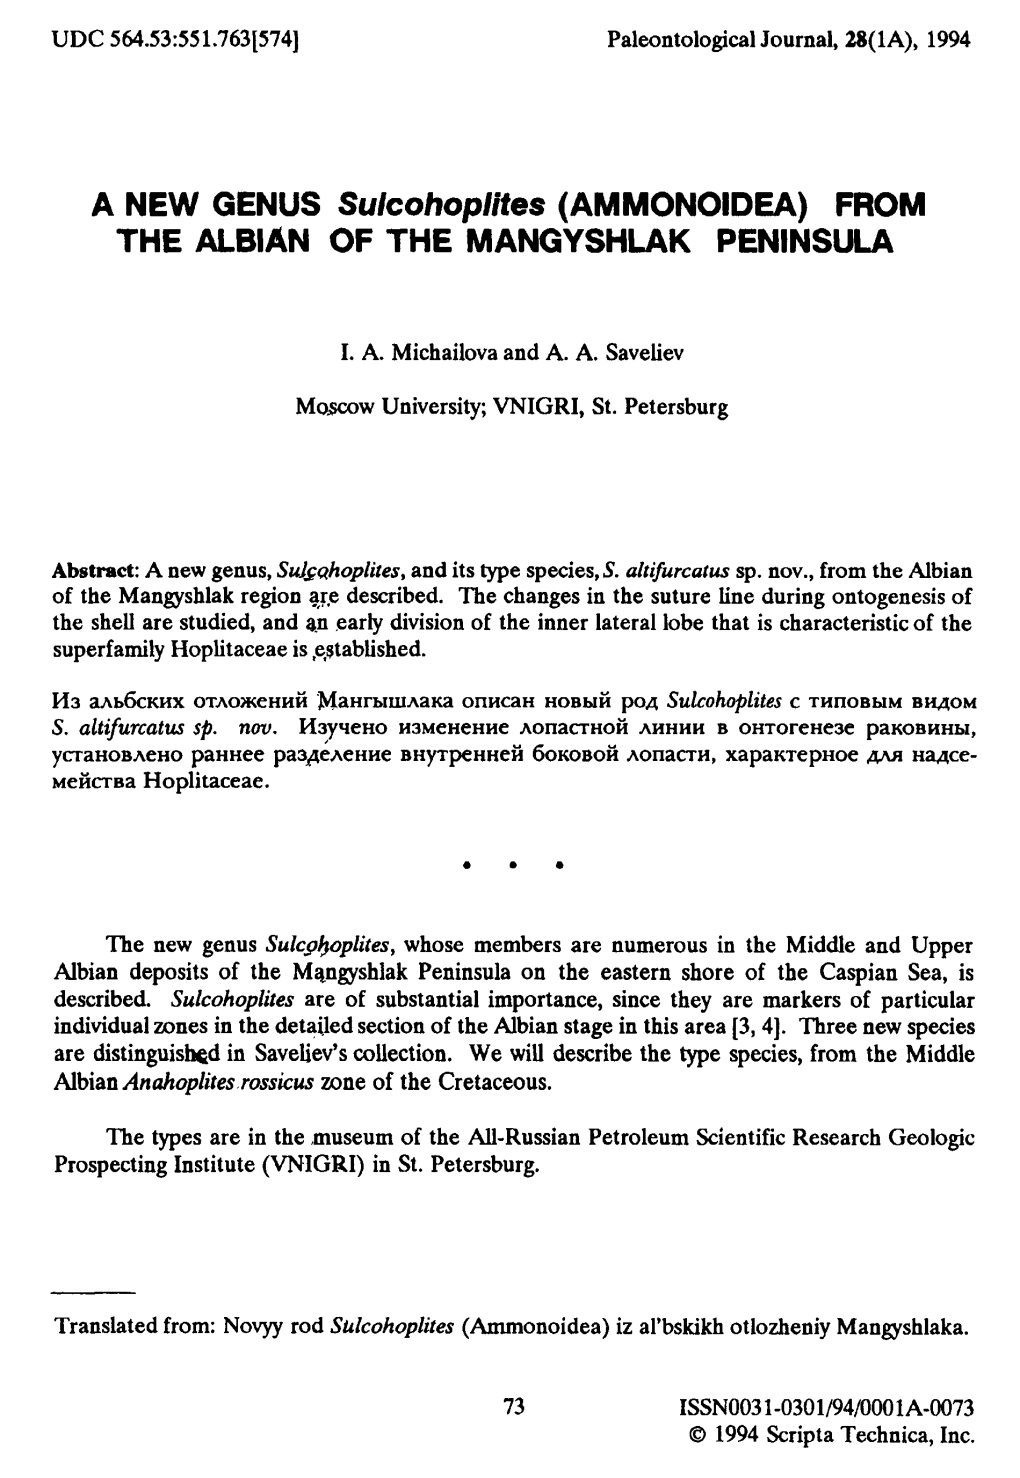 A NEW GENUS Sulcohoplites (AMMONOIDEA) from the ALBIAN of the MANGYSHLAK PENINSULA